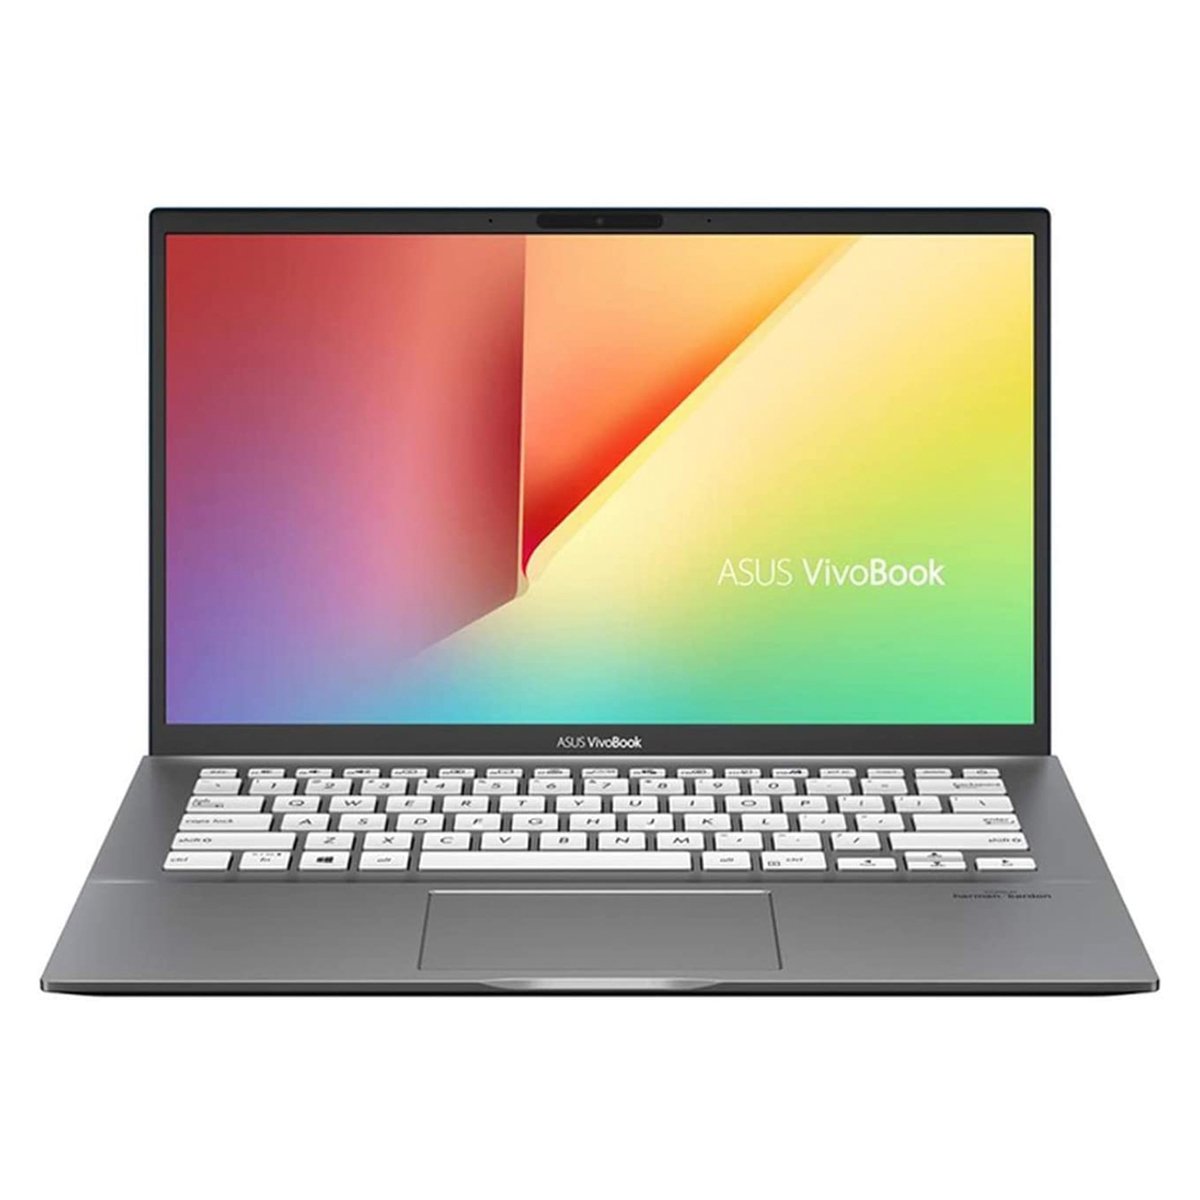 ASUS VivoBook S431Fl-Am002T Laptop,Core i7-8565U,16GB,512GB SSD,NVIDIA GeForce MX250 2GB,14 inches FHD,Windows 10,Gun Metal Grey